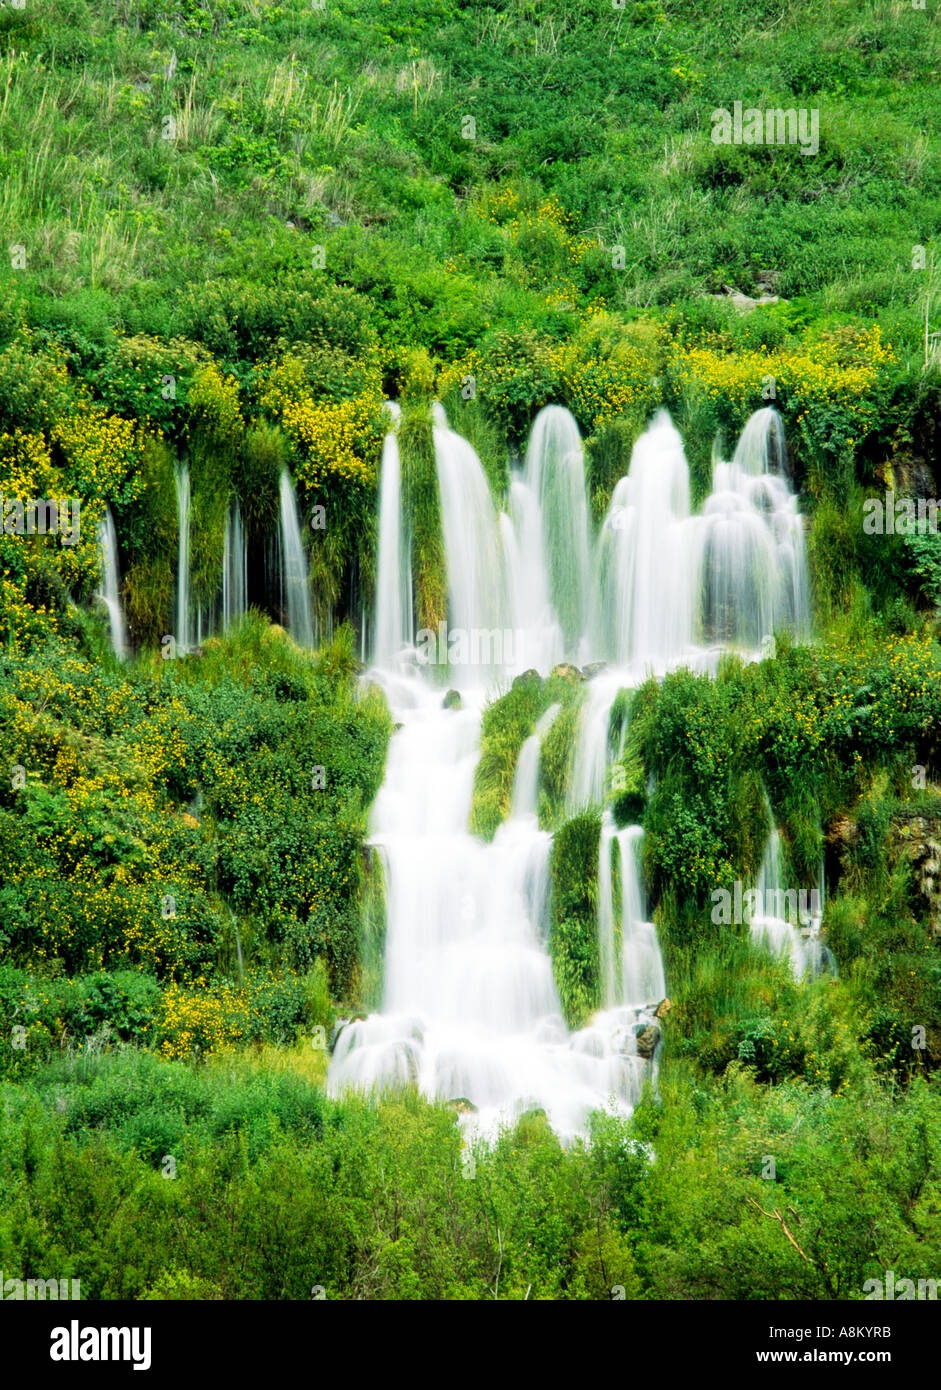 USA IDAHO NIAGARA SPRINGS STATE PARK Thousand springs cascading from waterfalls Hagerman Valley Stock Photo